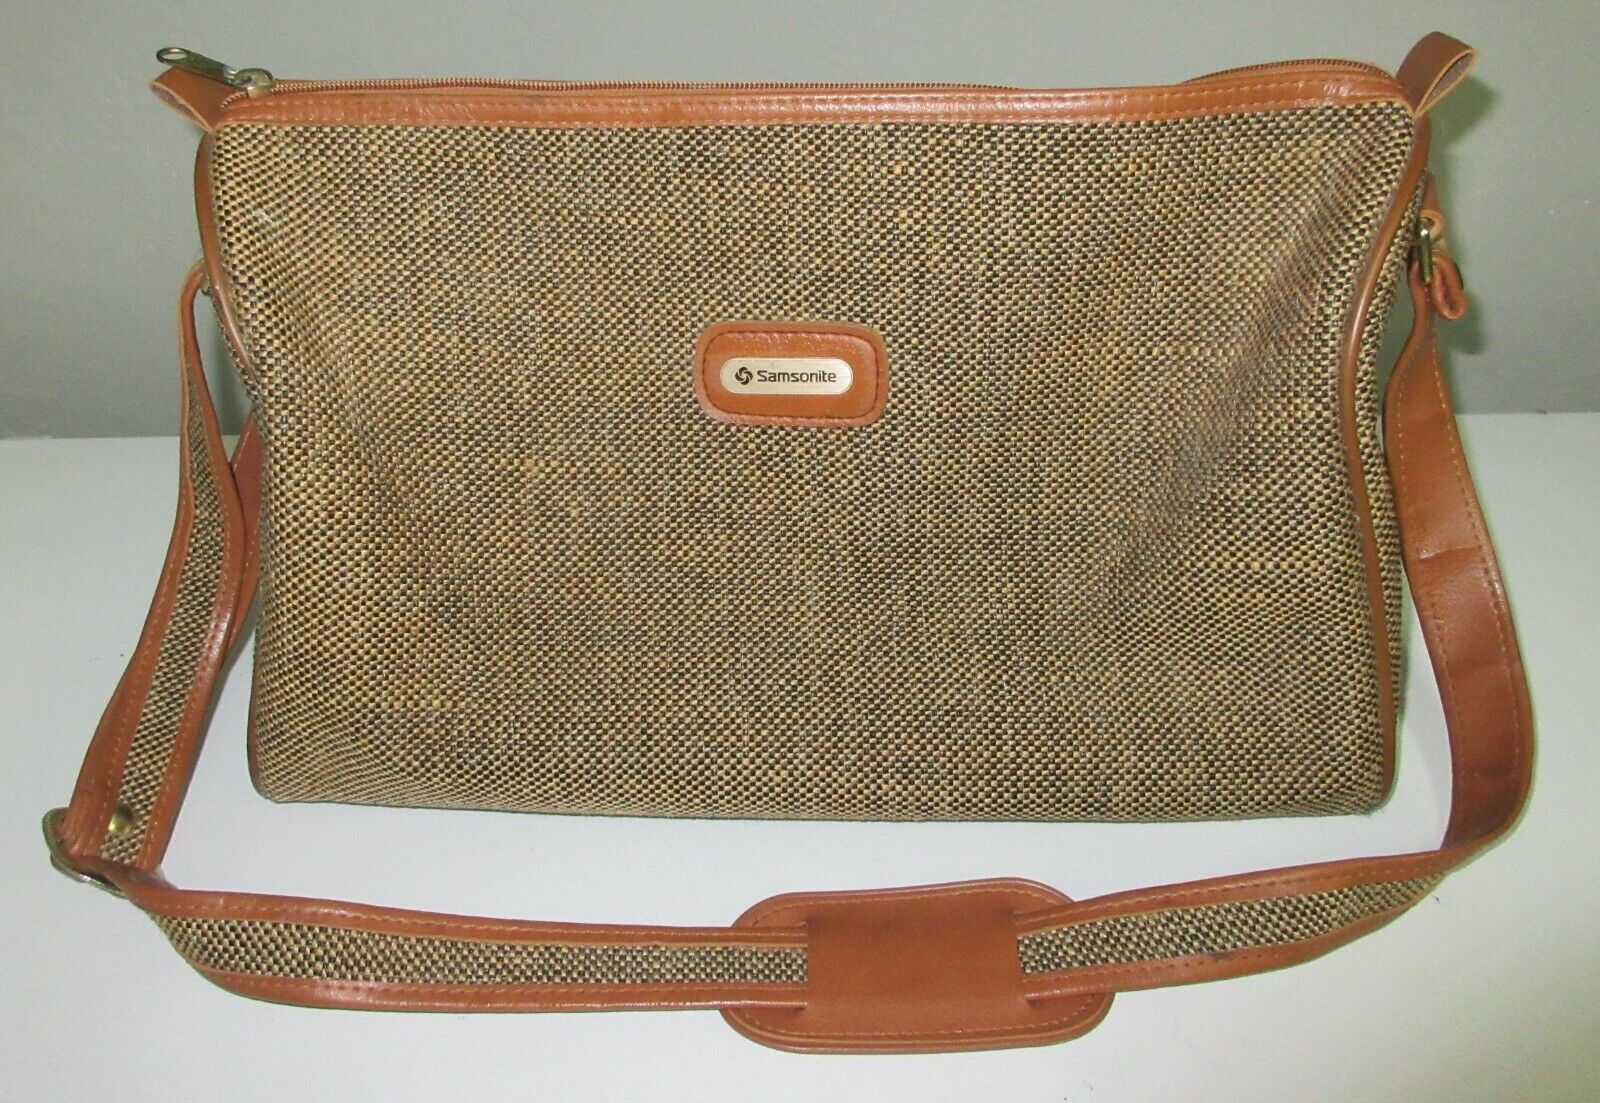 Vintage Samsonite Carry On Bag  / 15" x 10" x 8" / Good Condition / Minimal Wear